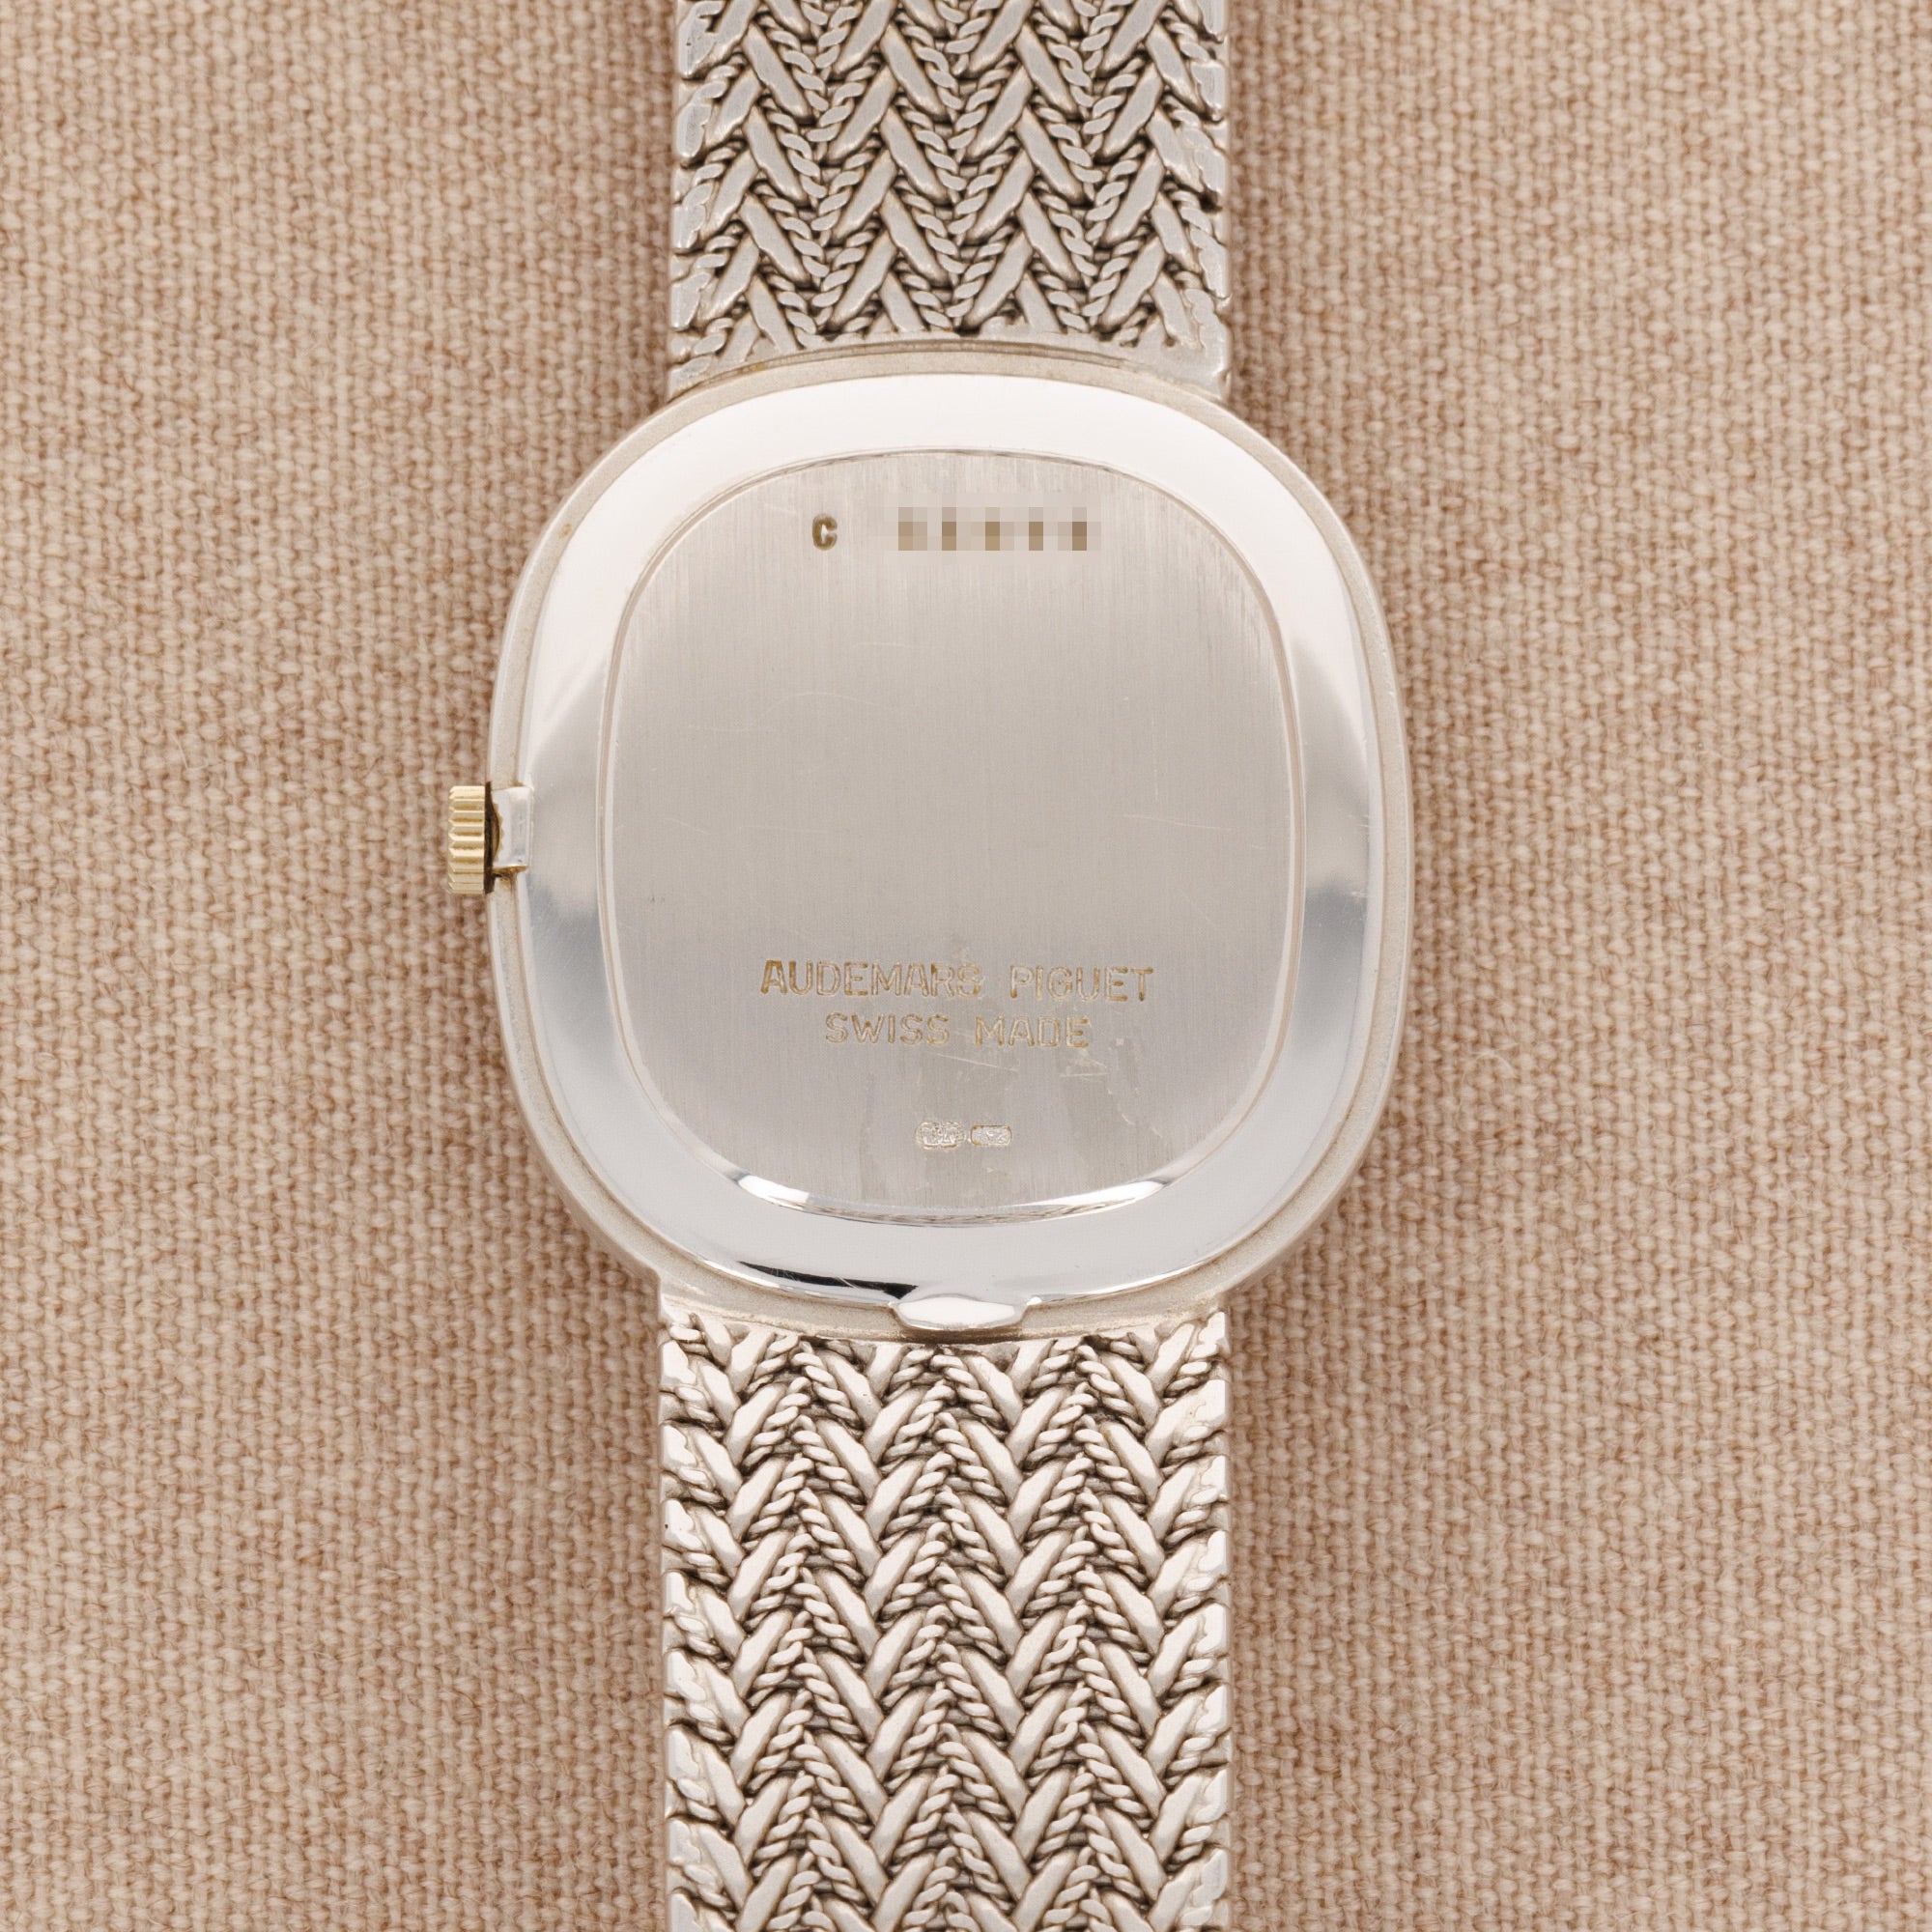 Audemars Piguet White Gold and Diamond Watch